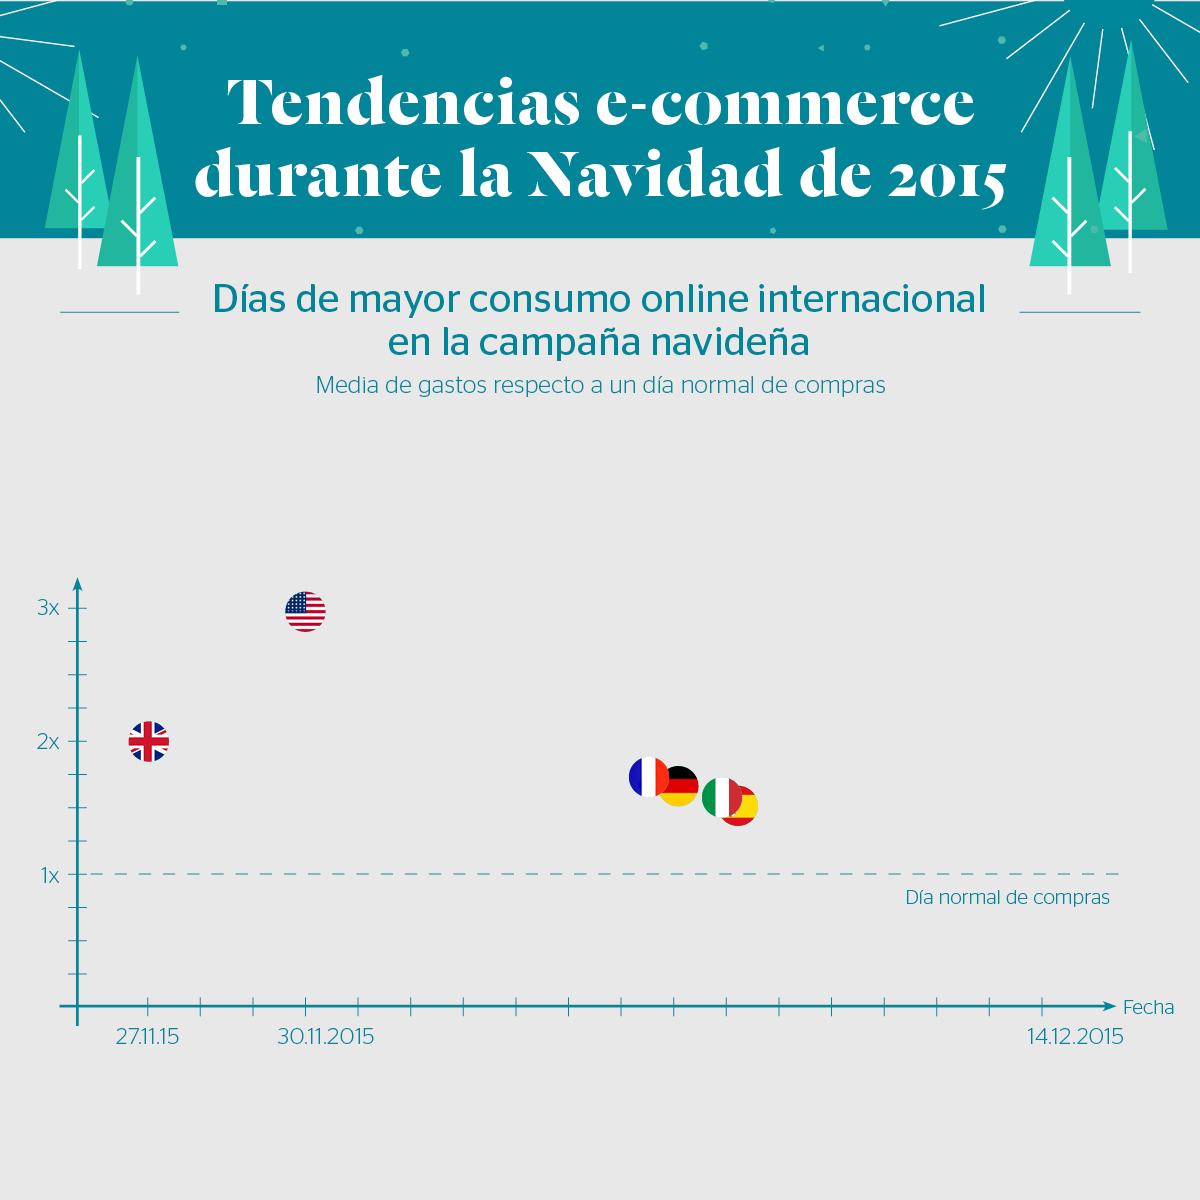 Tendencias e-commerce para Navidad 2015 según Stylight